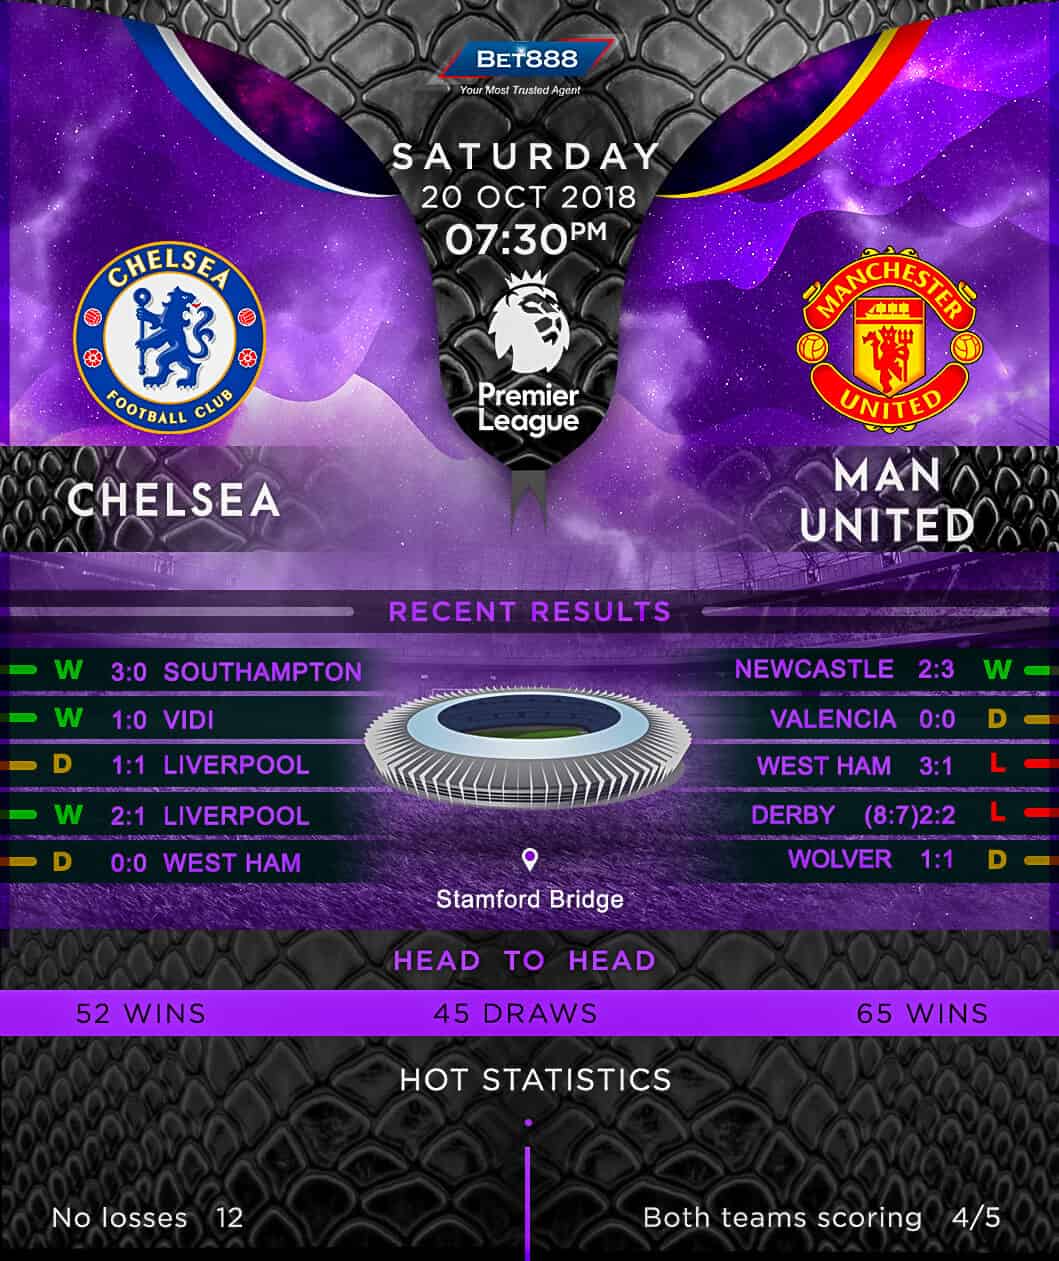 Chelsea vs Manchester United 20/10/18